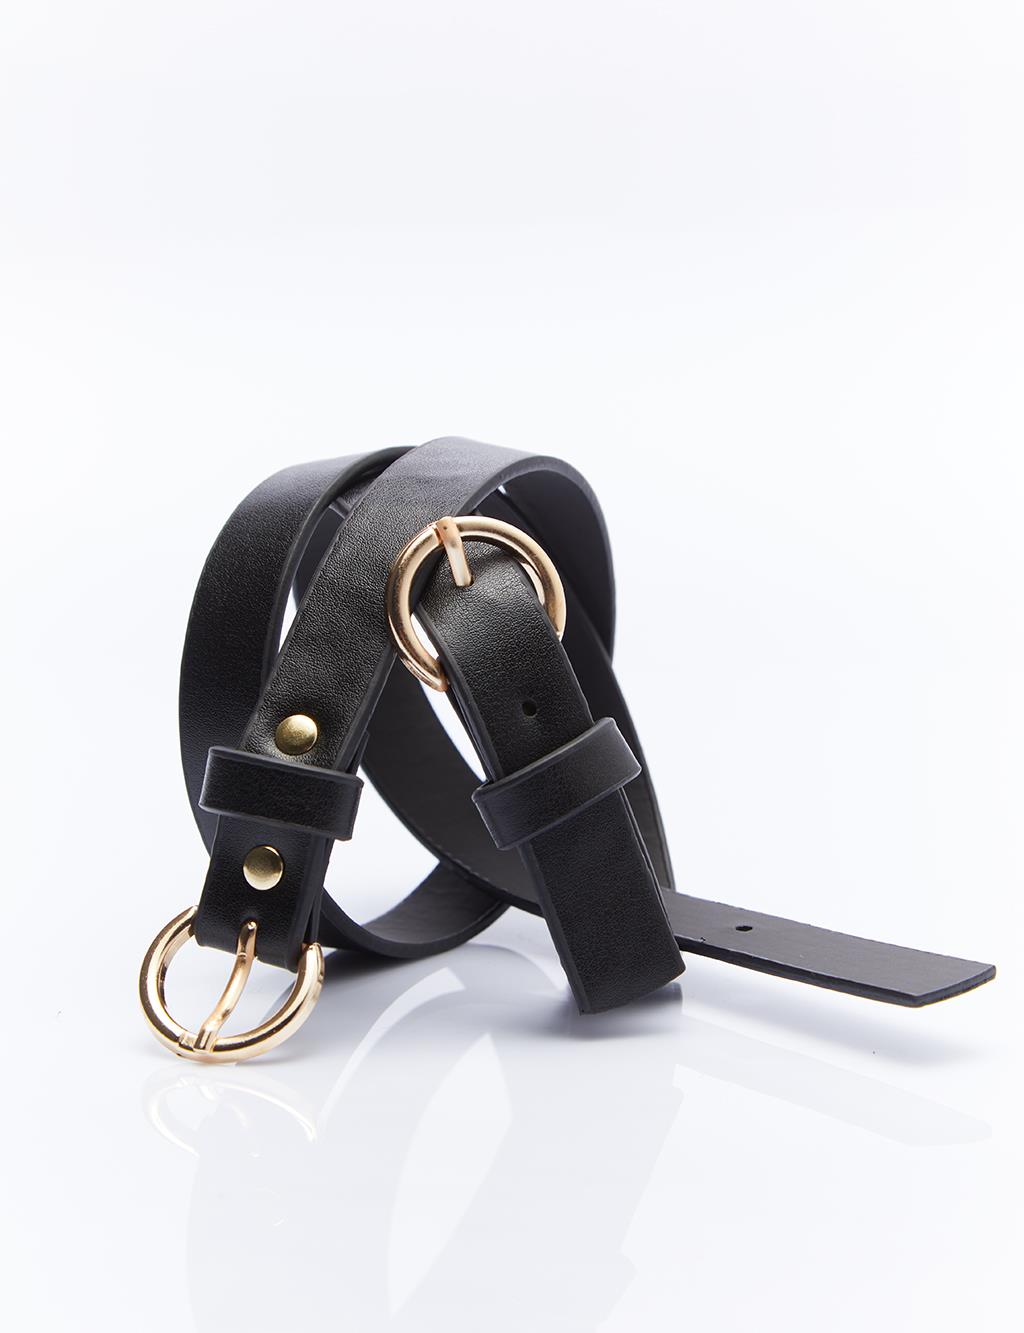 Adjustable Double Buckle Belt Black Gold